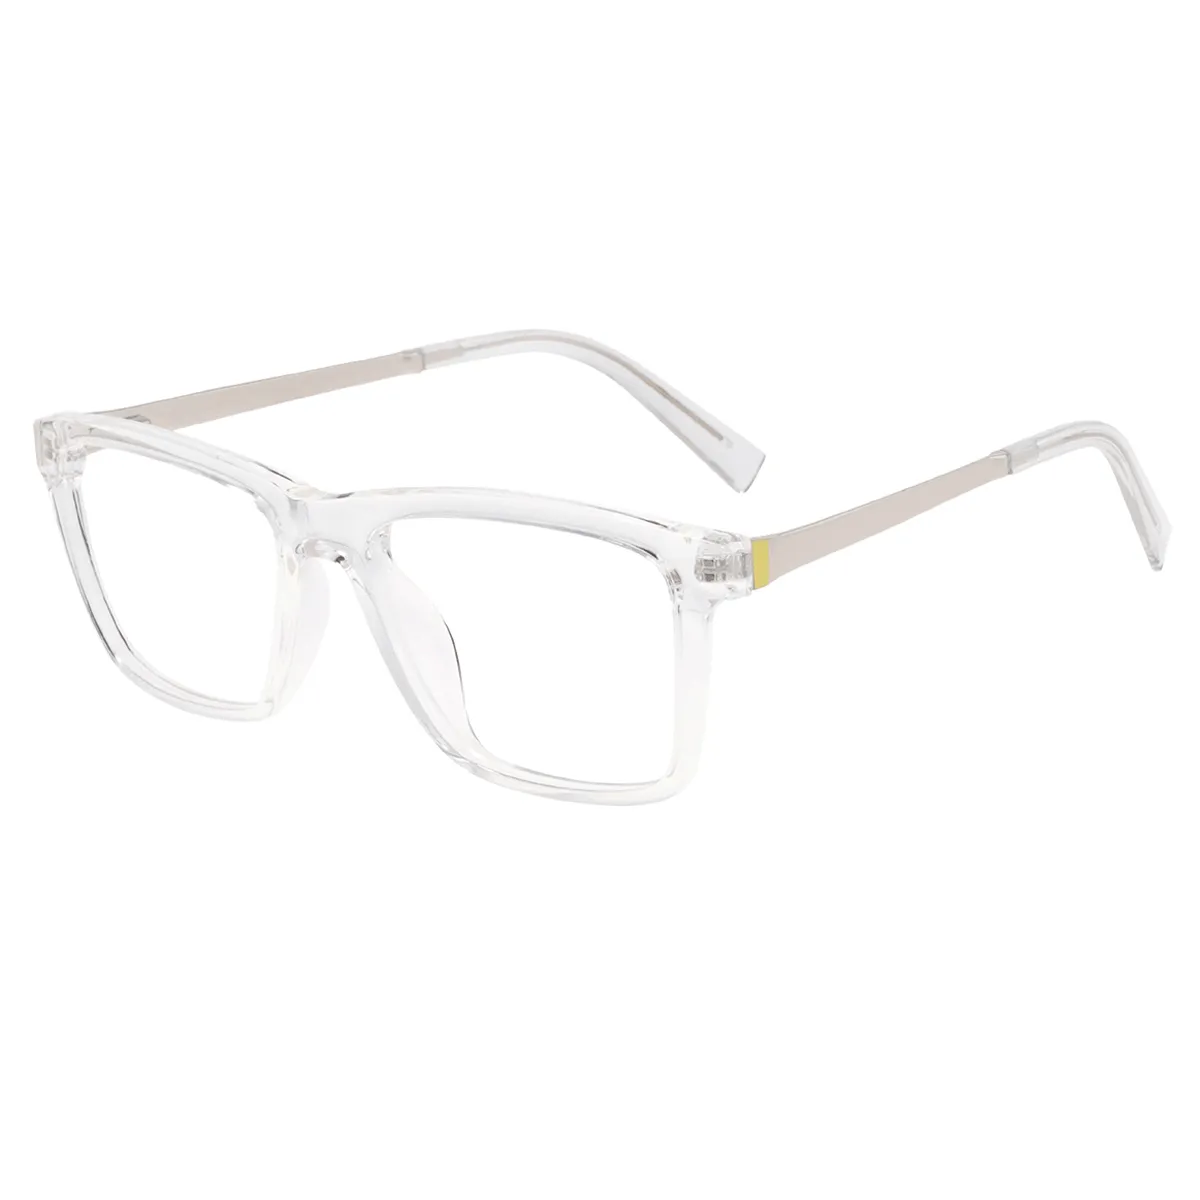 Owen - Square Translucent Glasses for Men & Women